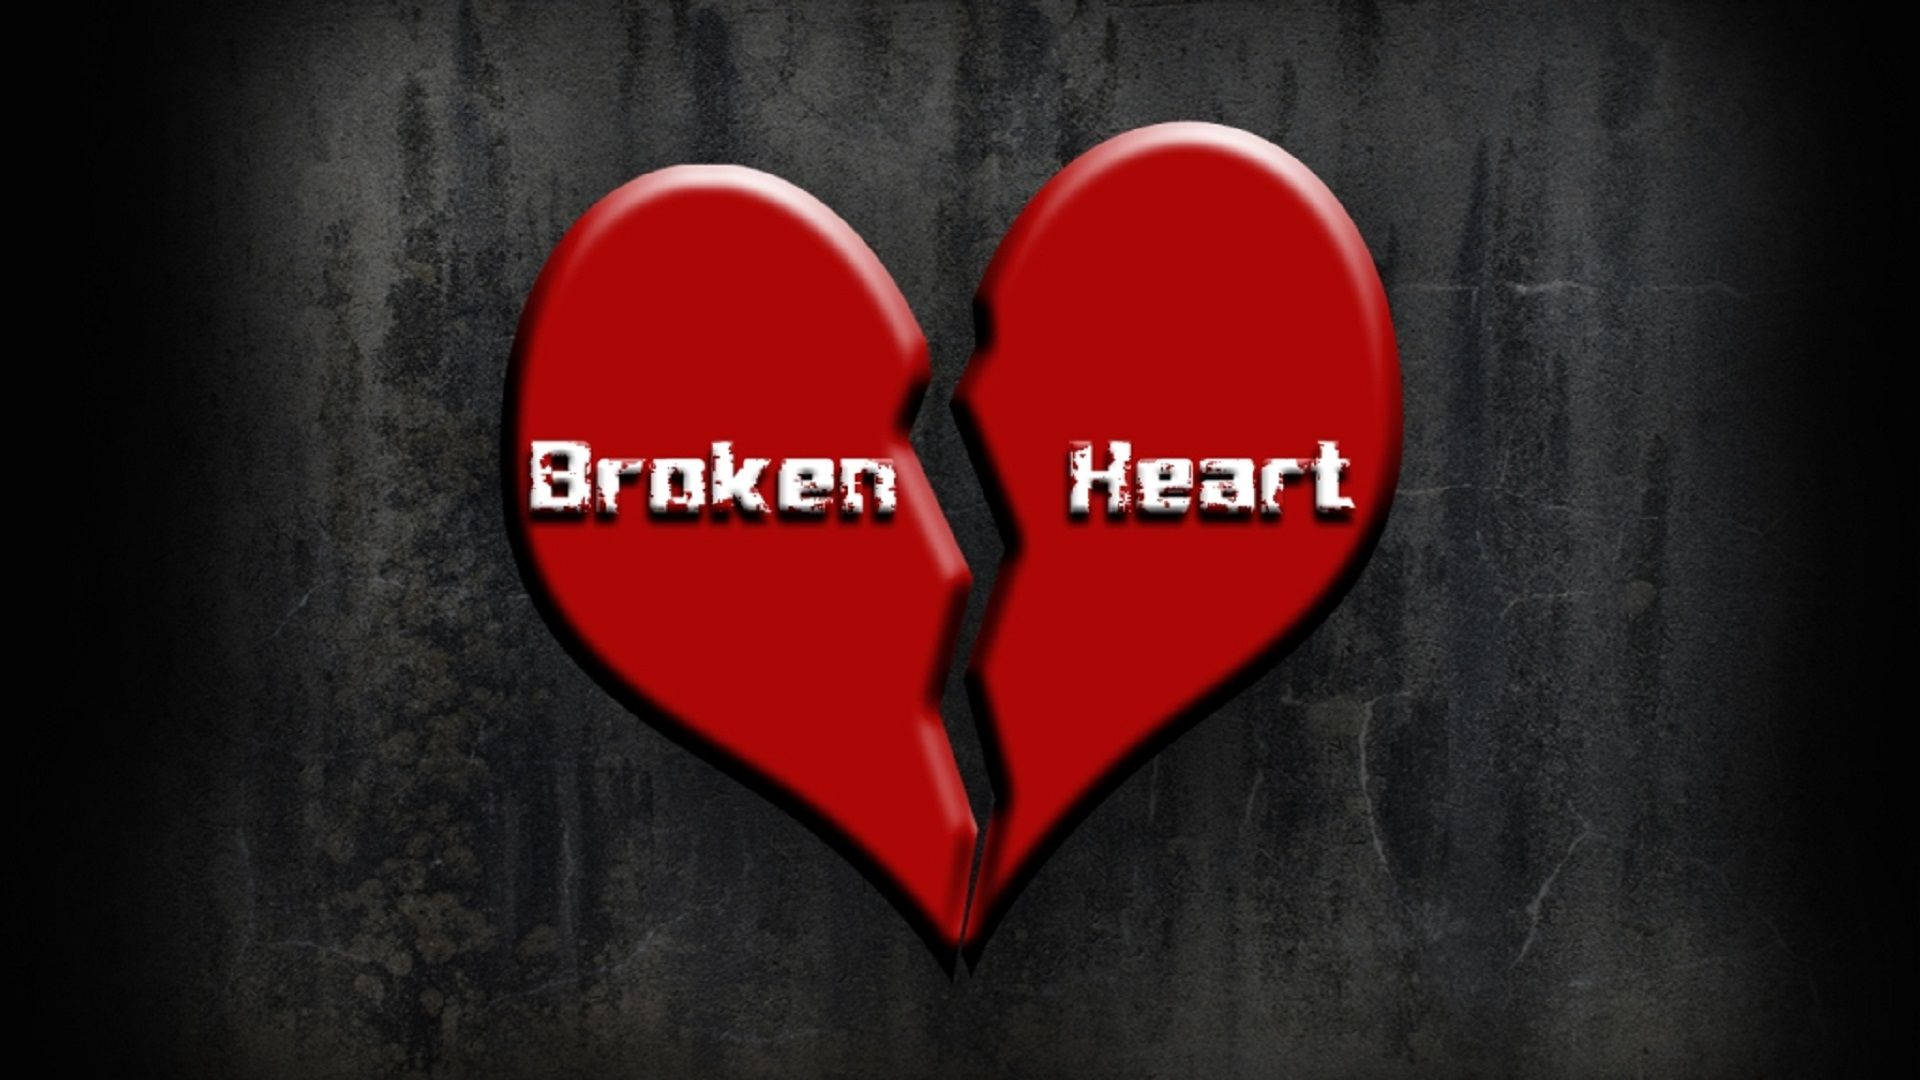 Broken Heart 1920X1080 Wallpaper and Background Image